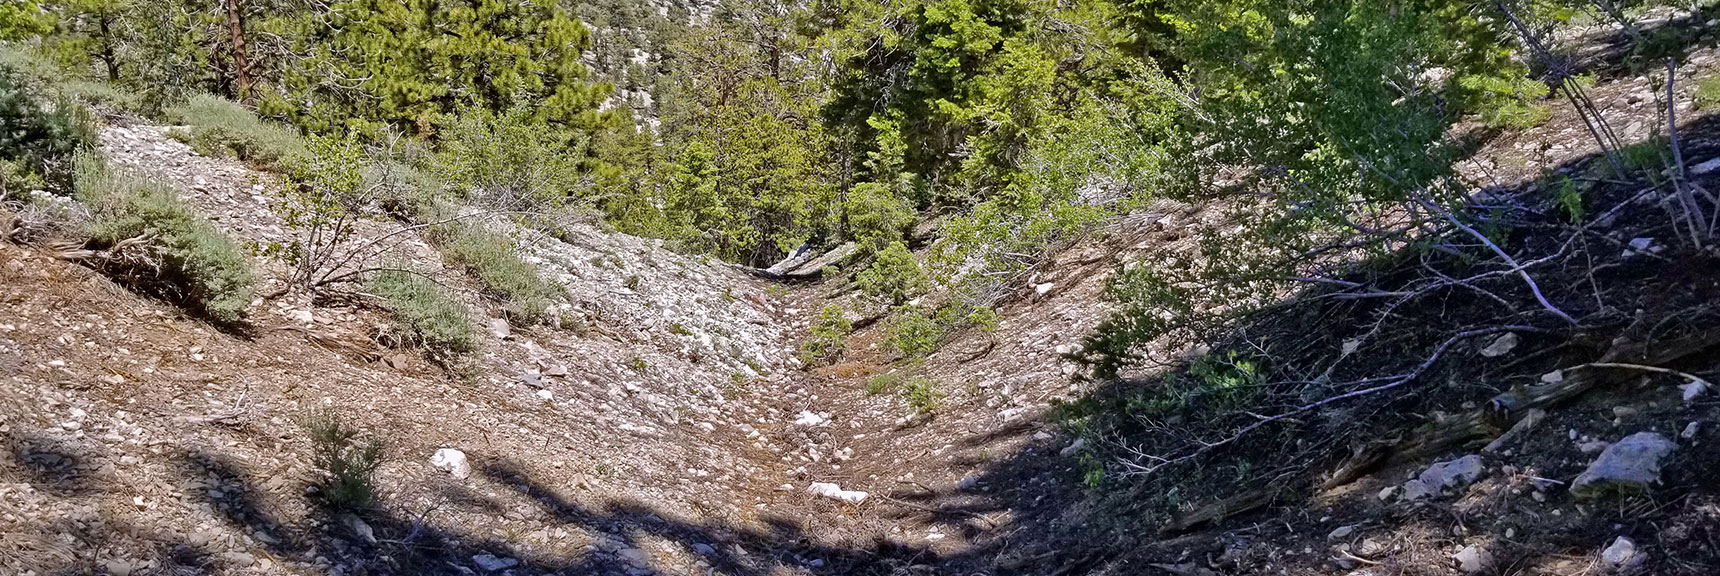 Wash Gully Good Surface, Gradual, No Obstacles| Macks Peak | Mt Charleston Wilderness | Spring Mountains, Nevada